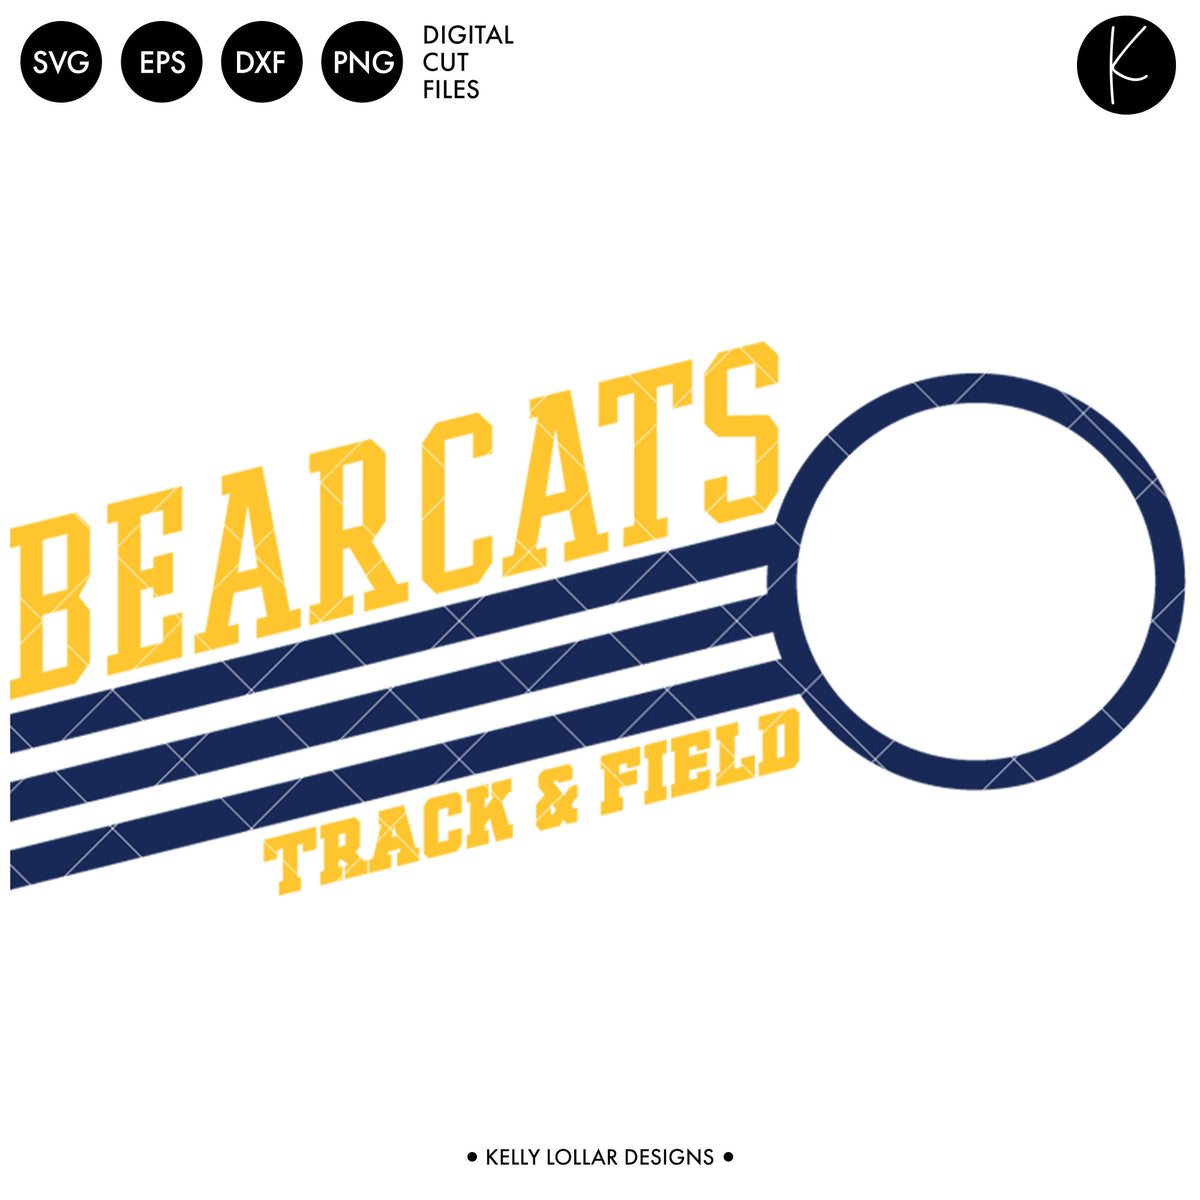 Bearcats Track &amp; Field Bundle | SVG DXF EPS PNG Cut Files